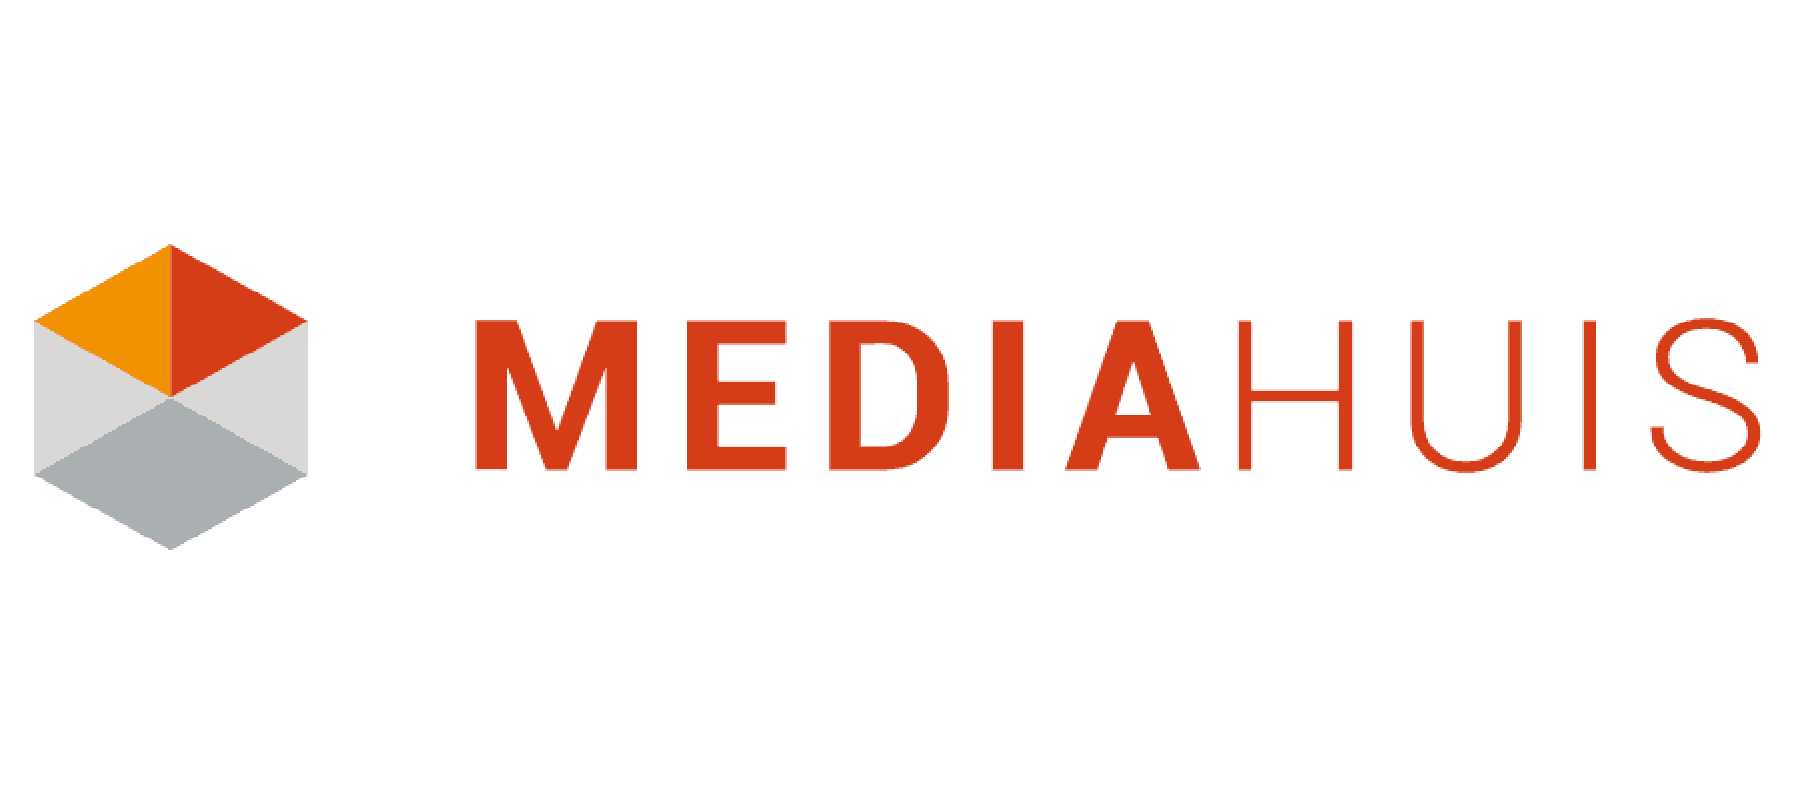 Mediahuis combines Dutch radio operations into a new organization